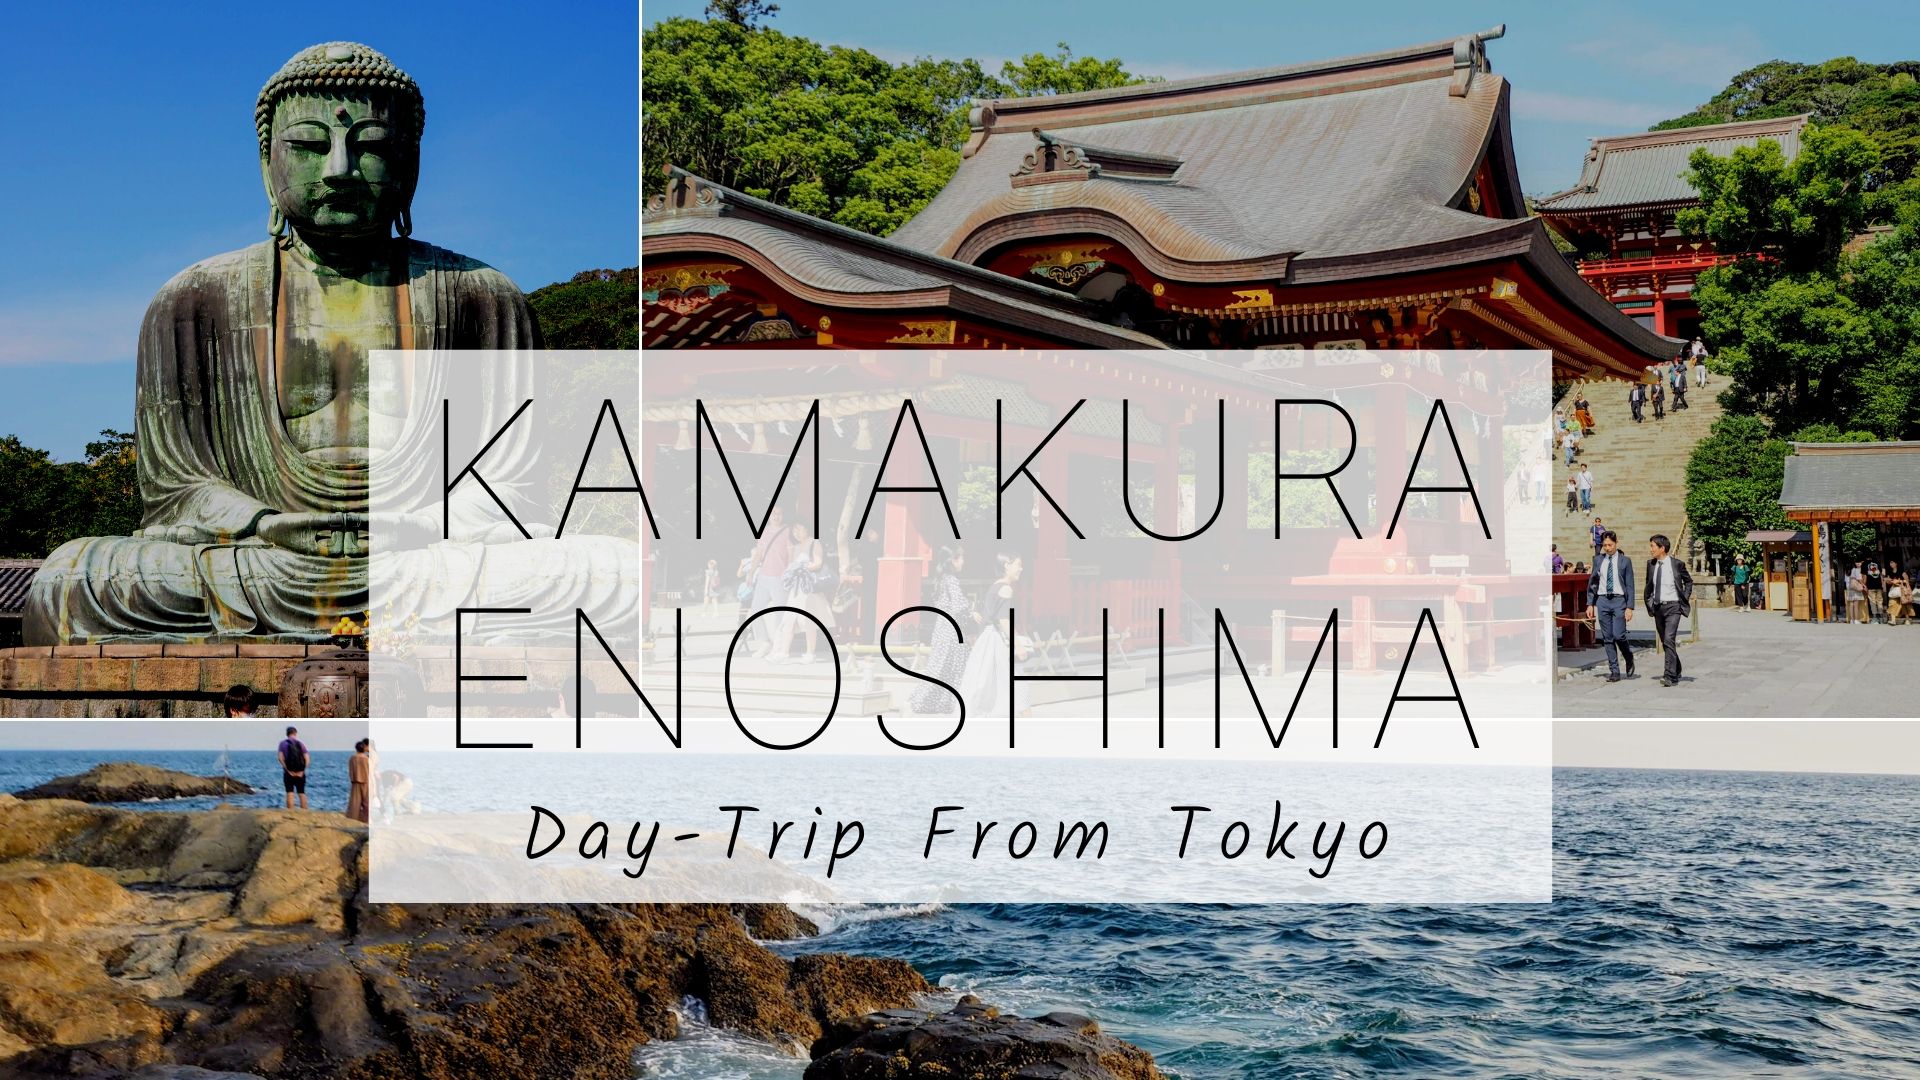 Kamakura-Enoshima Day Trip From Tokyo